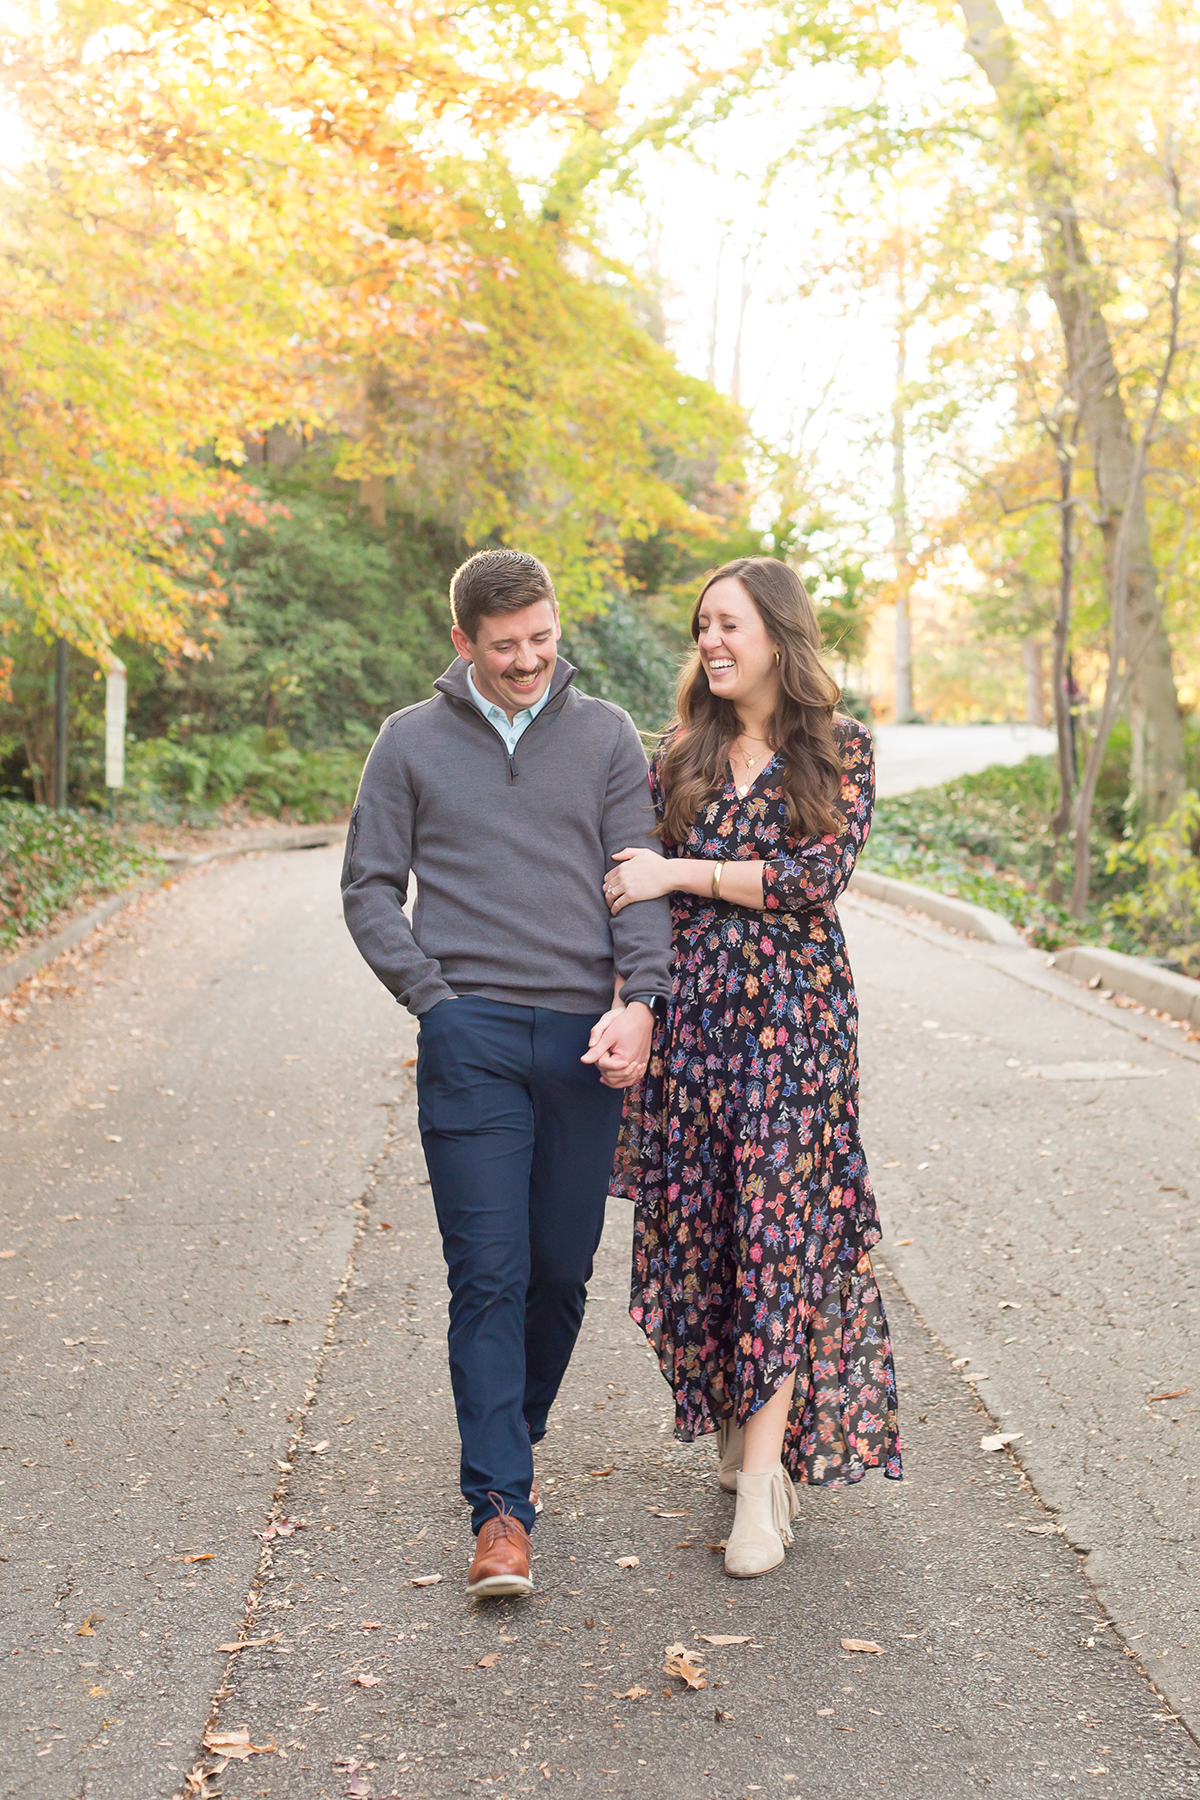 Proposal in Falls Park, Greenville, SC | Christine Scott Photography